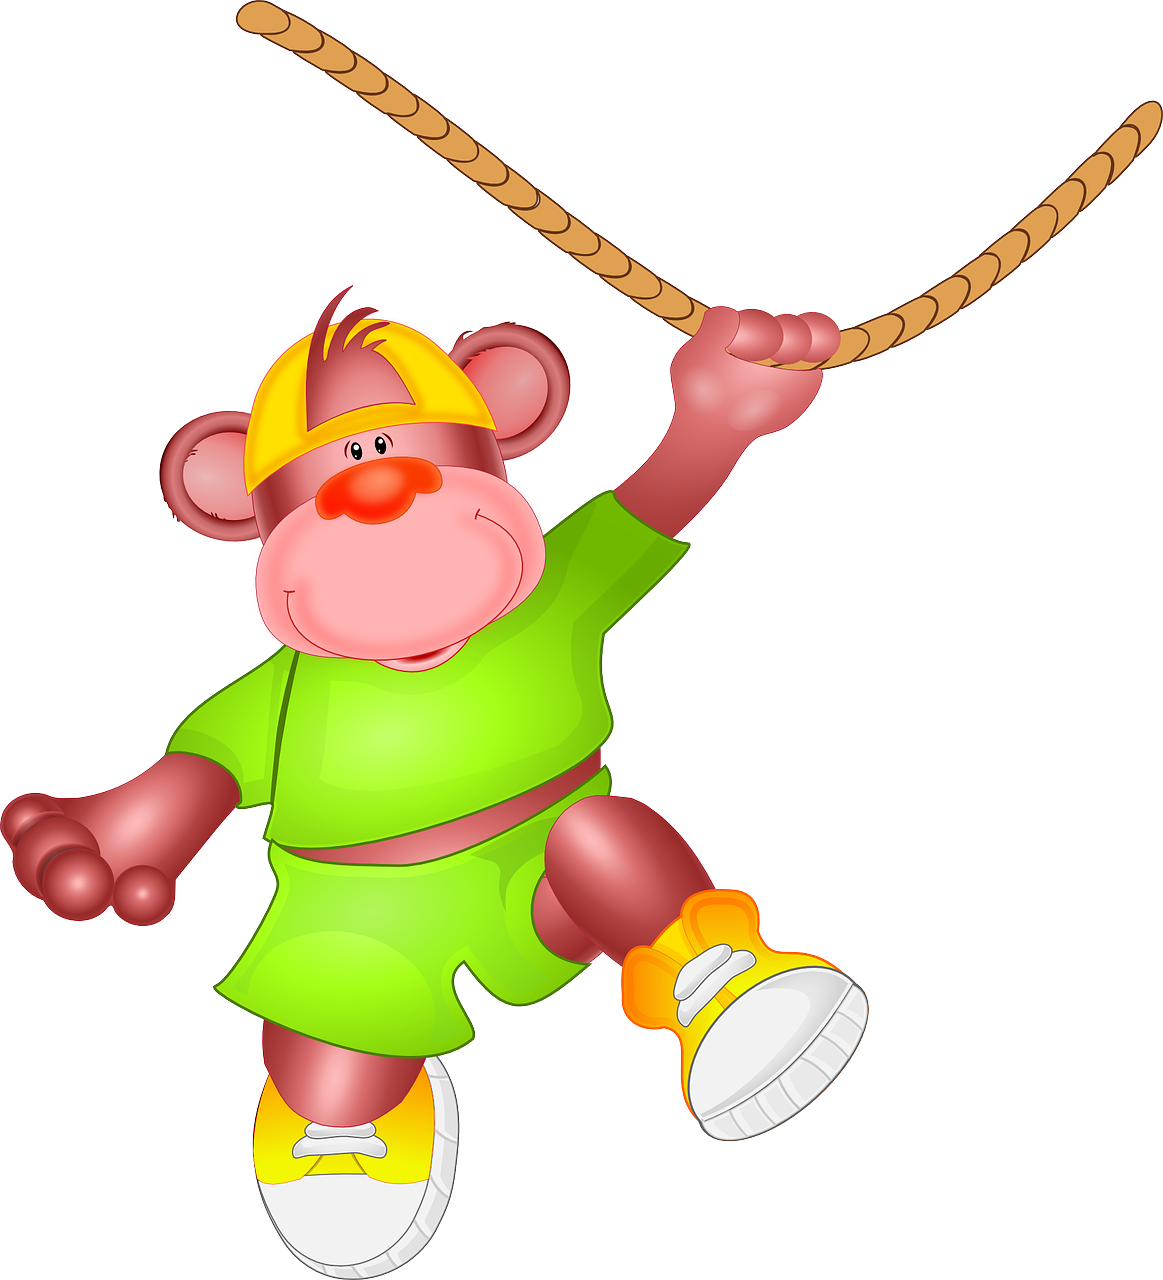 a cartoon monkey swinging on a rope, a digital rendering, mingei, asterix, children illustration, looks smart, climber